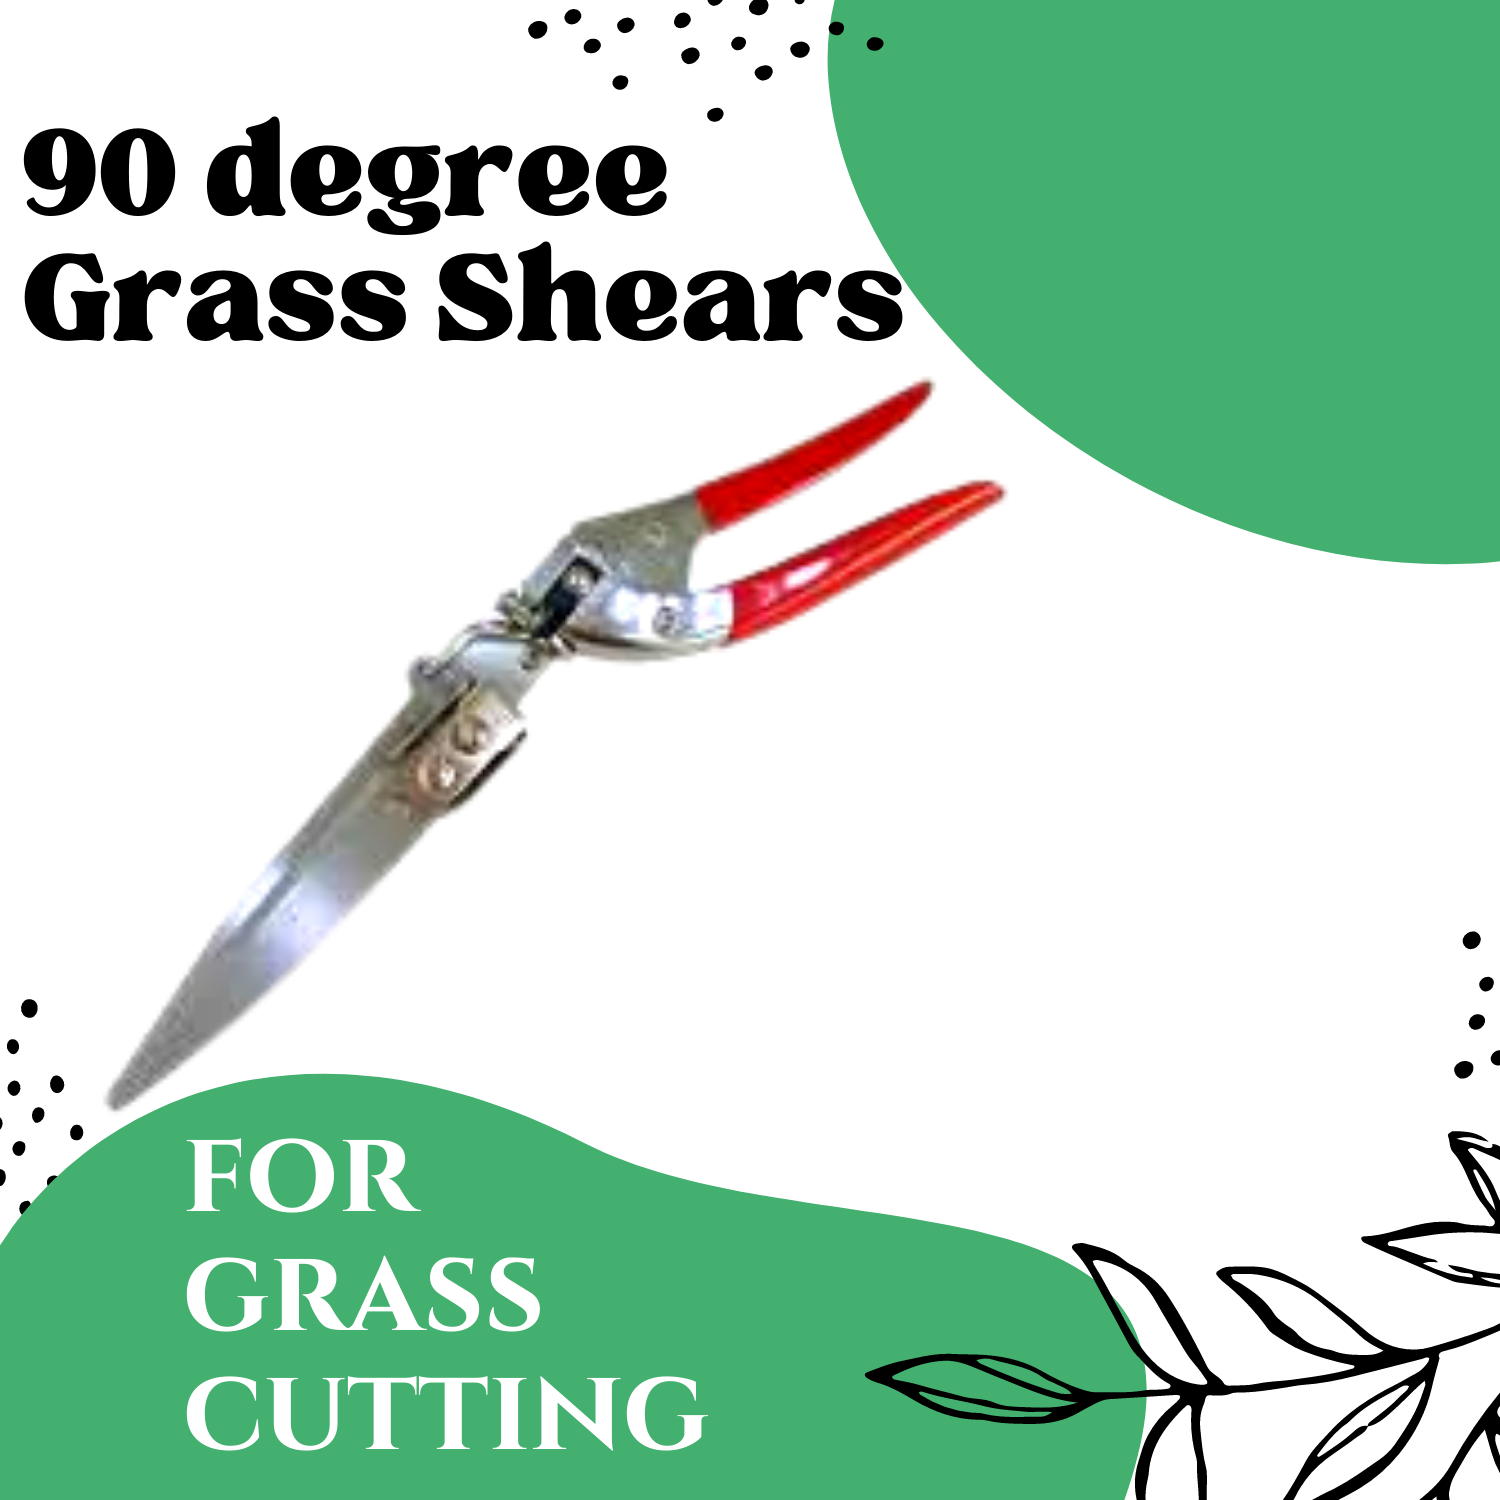 90 degree Grass Shears for grass cutting